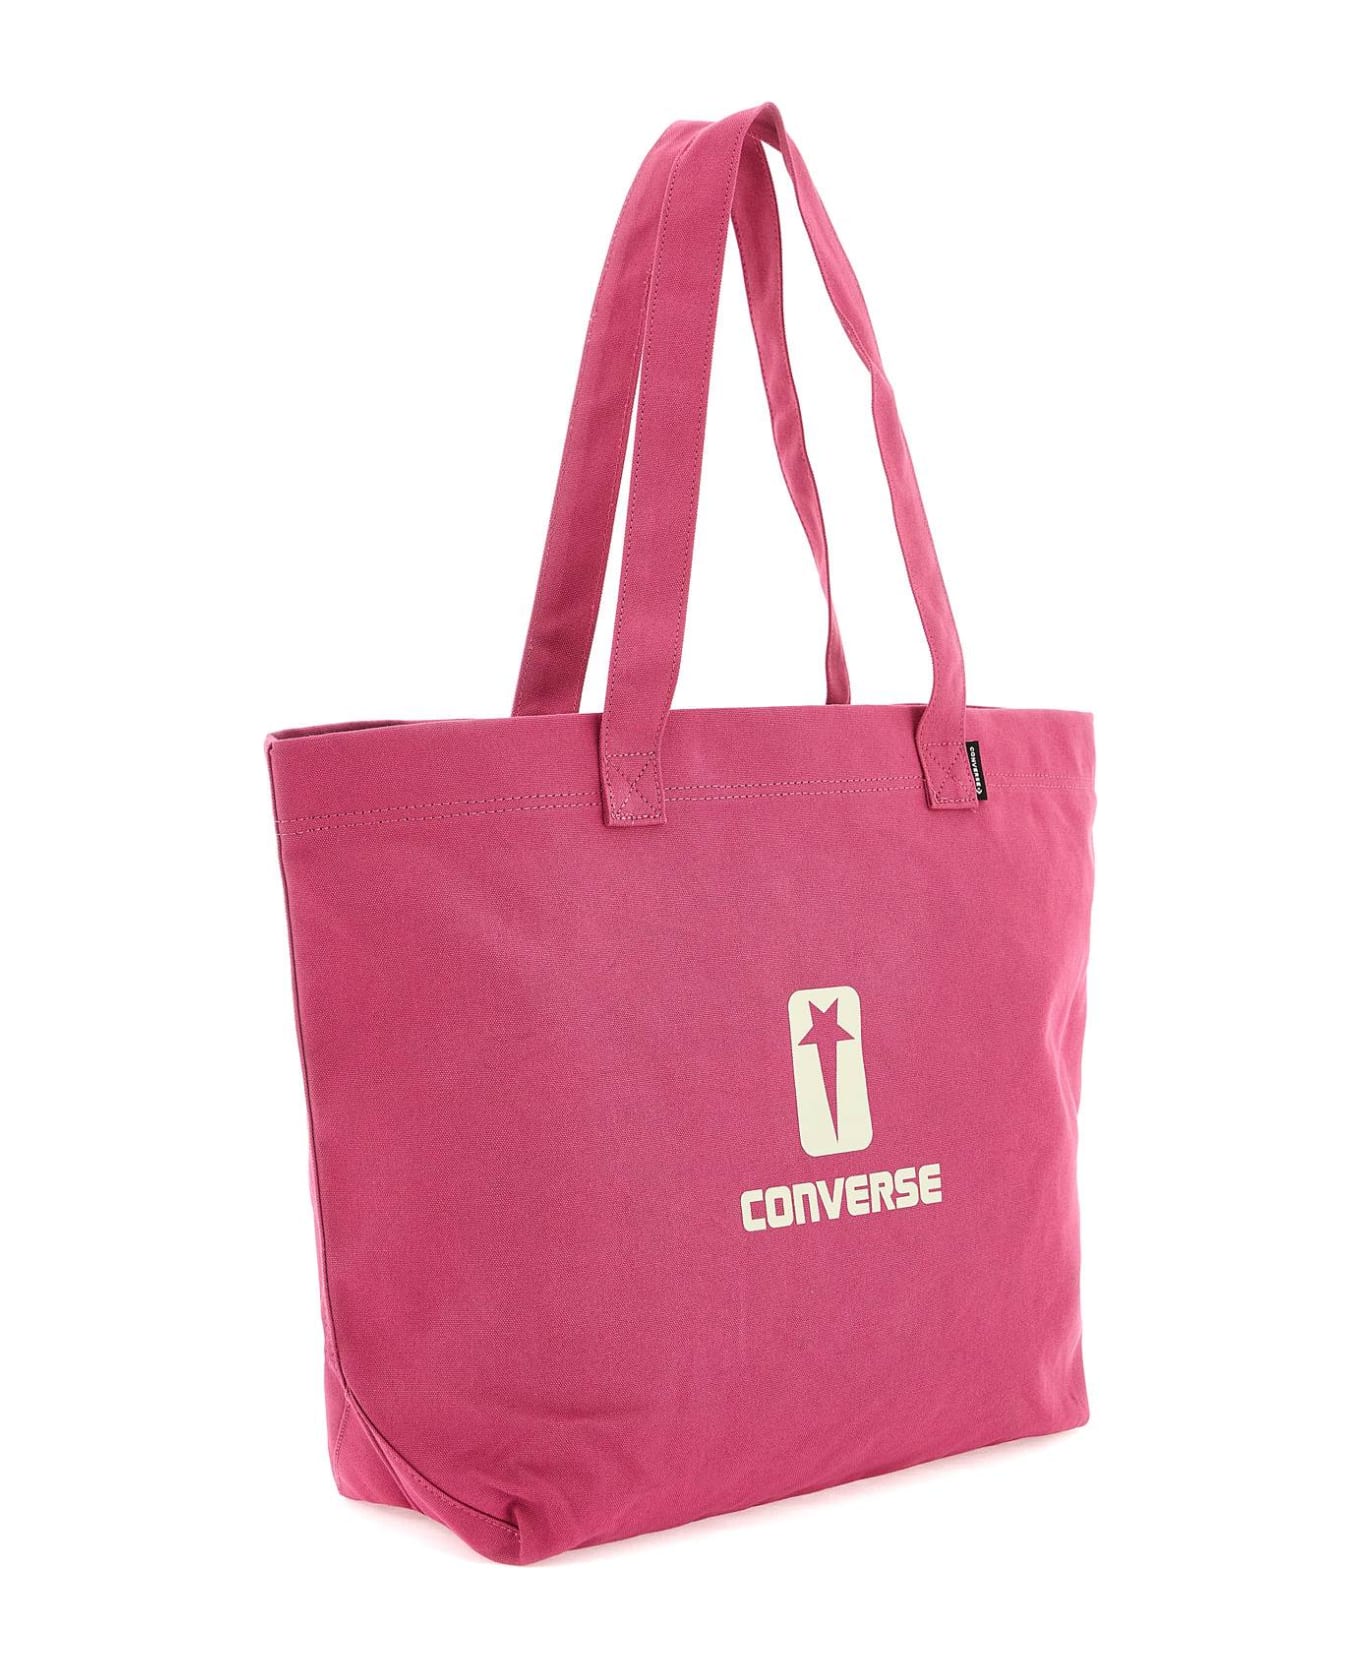 DRKSHDW Tote Bag - HOT PINK (Pink)